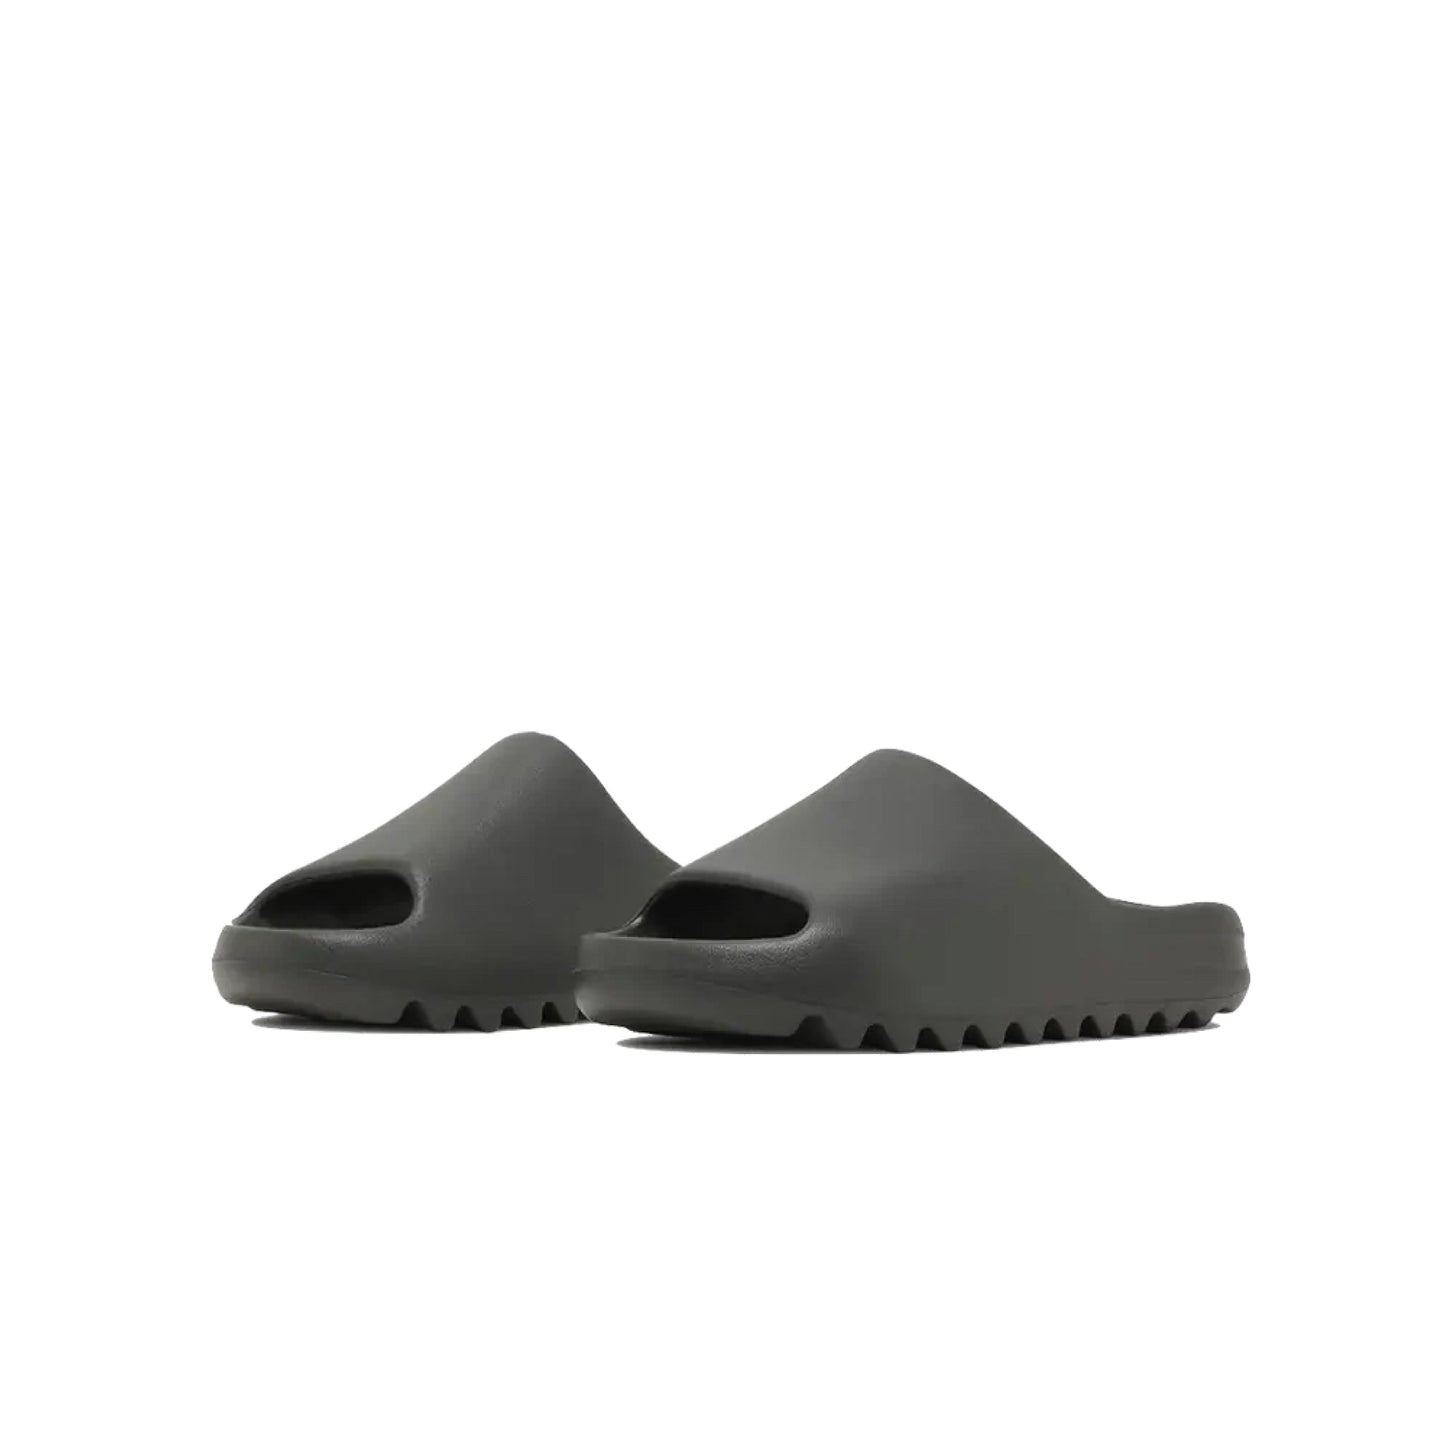 Adidas Yeezy Slide Dark Onyx